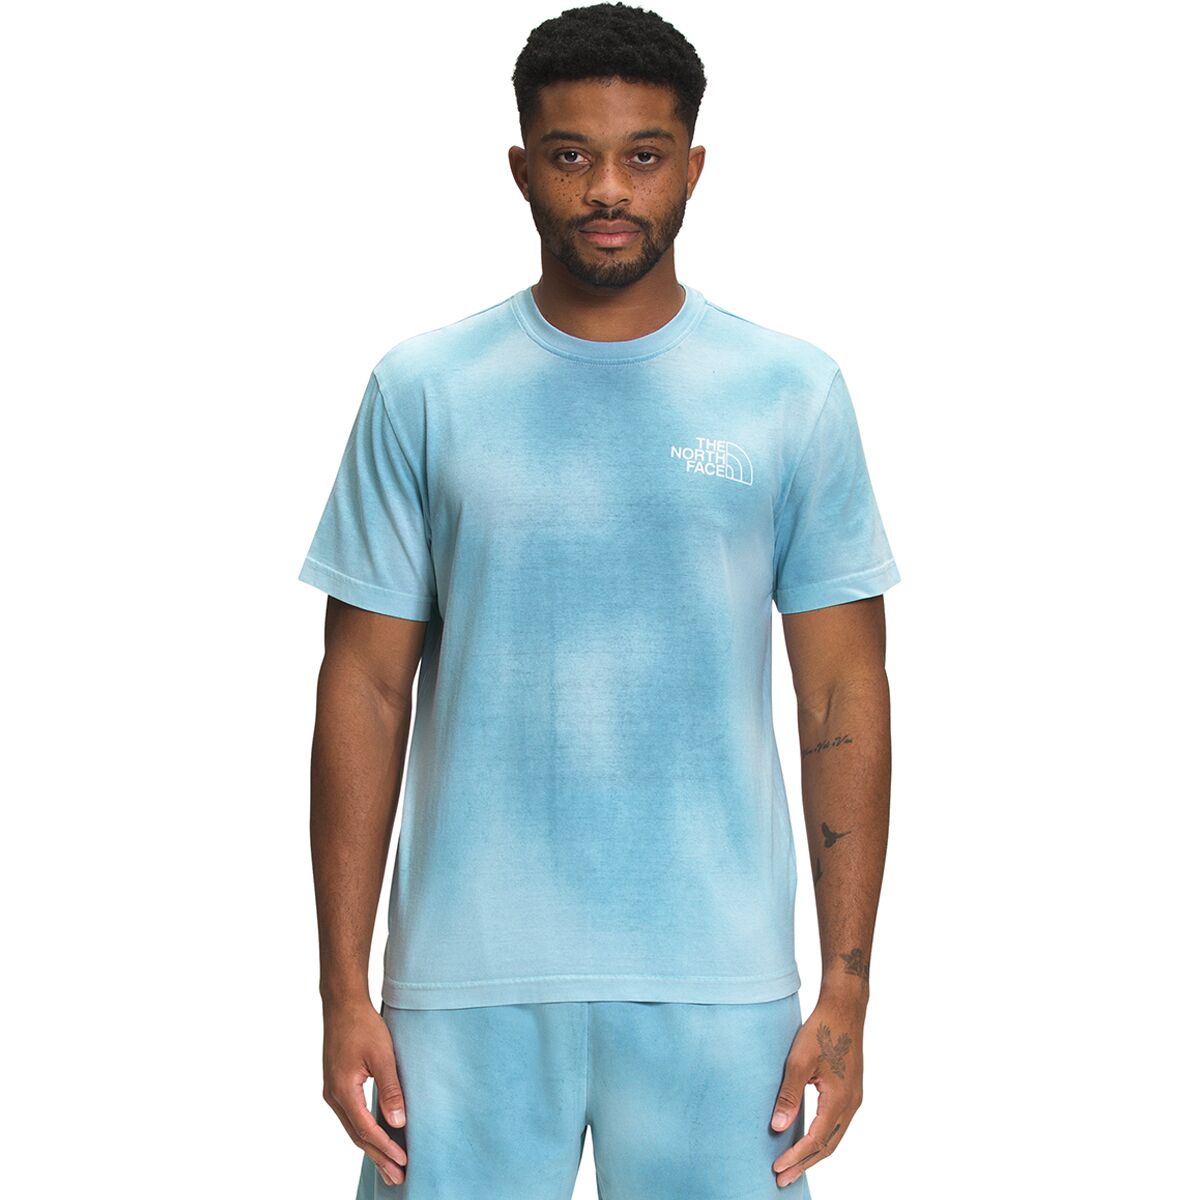 The North Face Dye Short-Sleeve T-Shirt - Men's